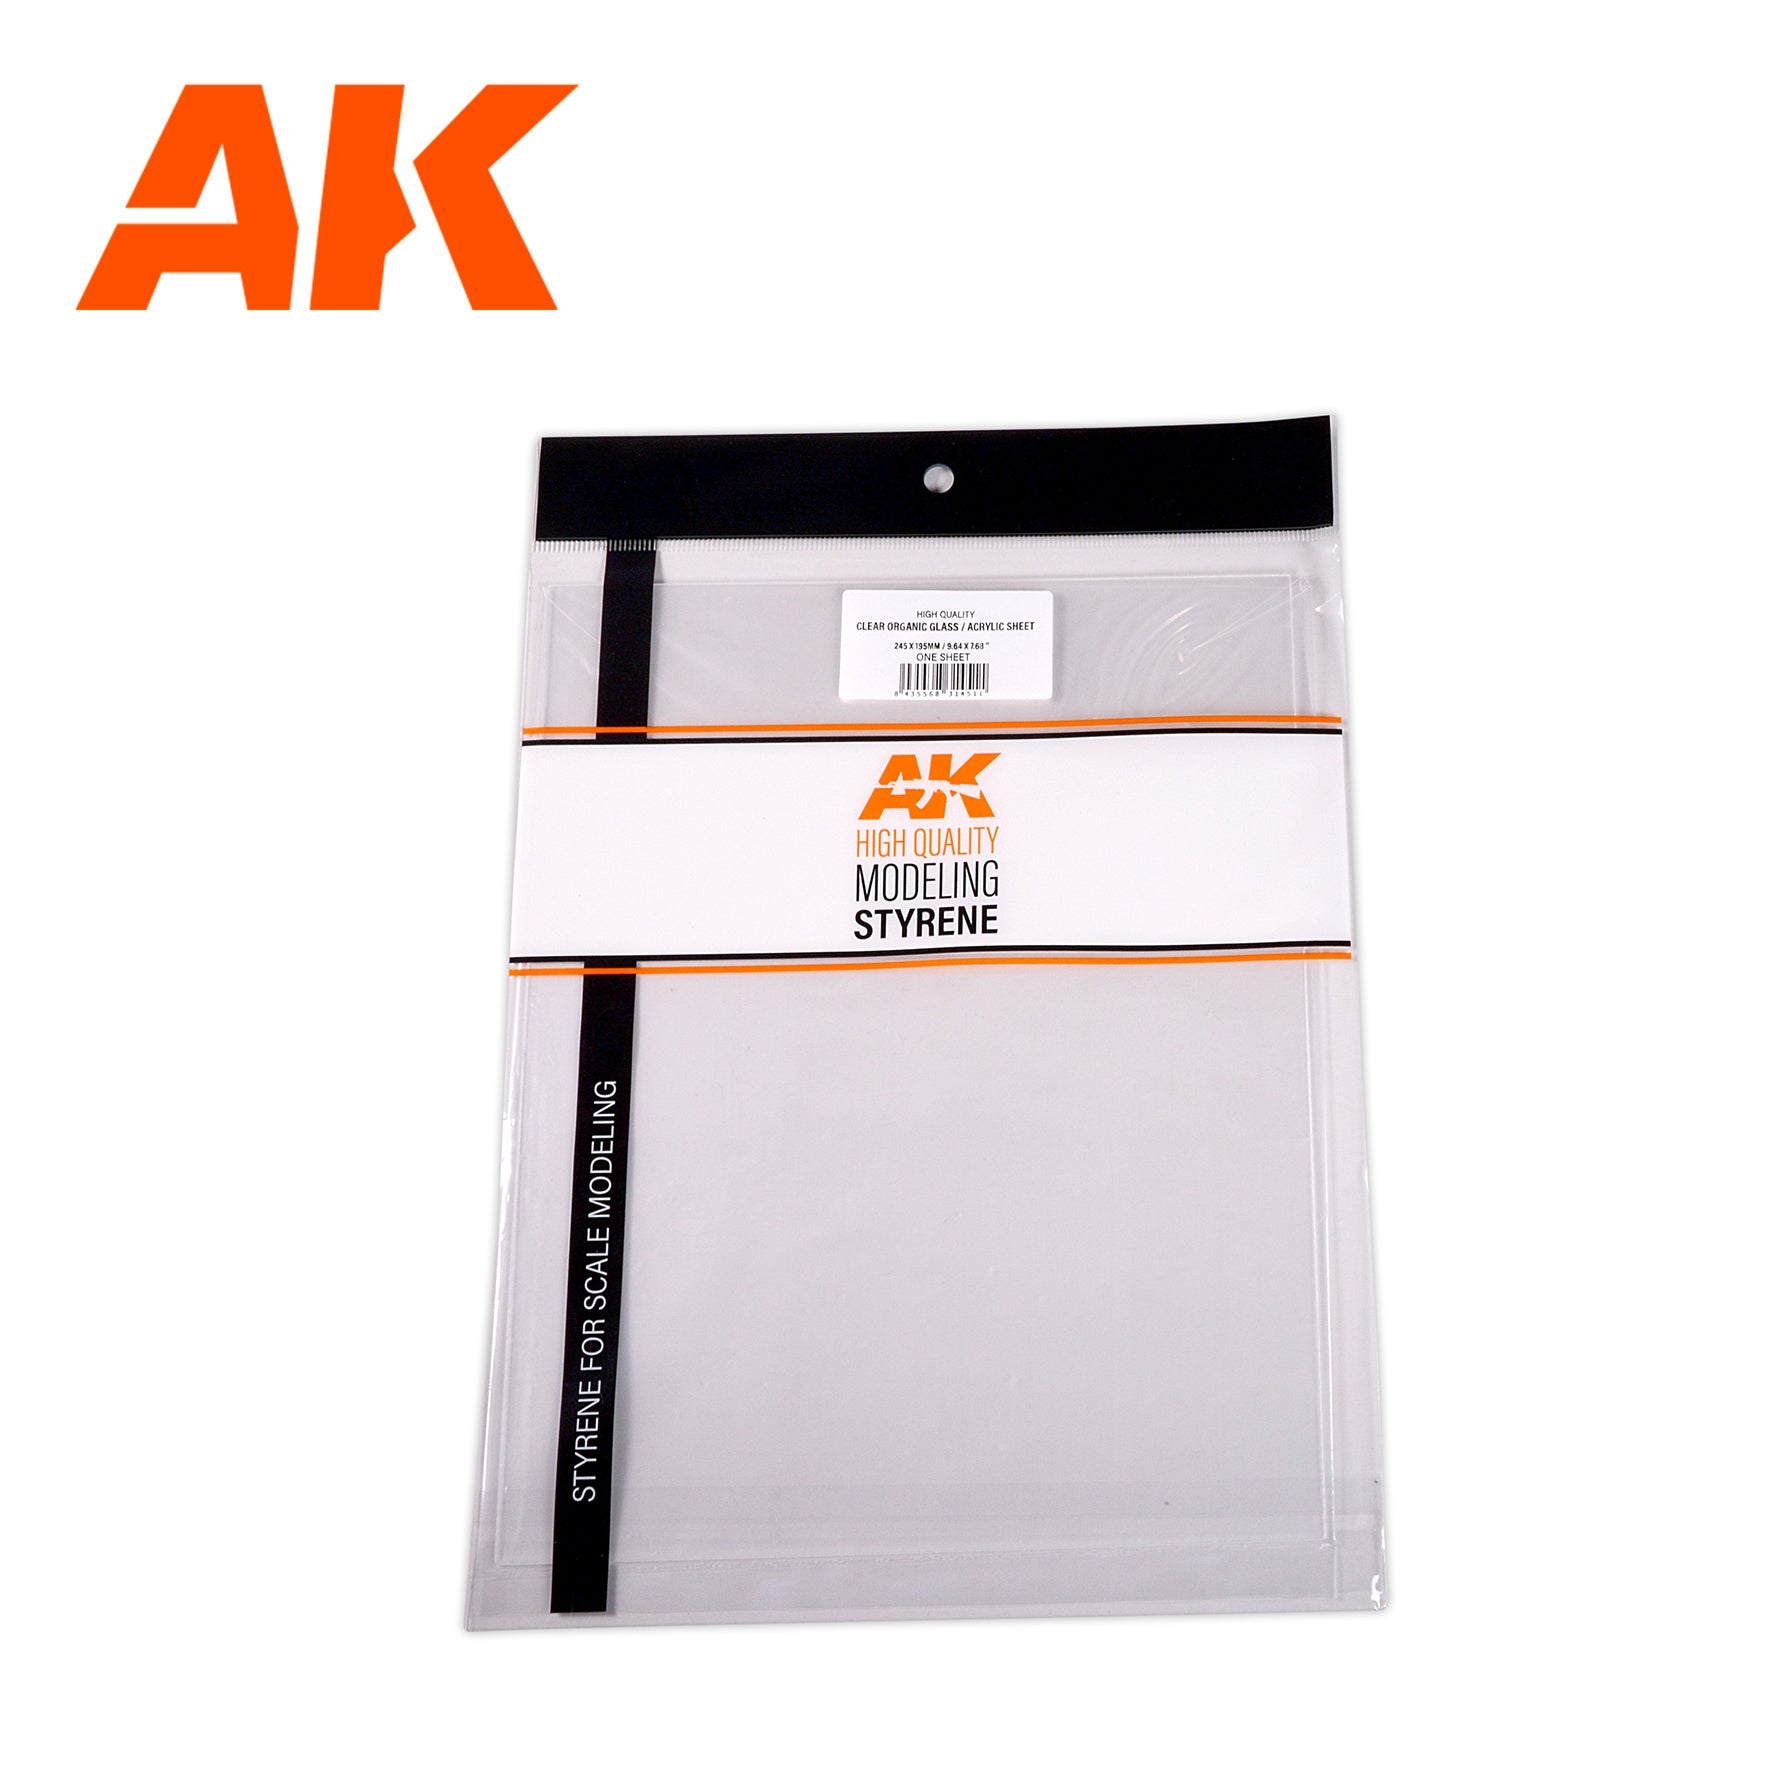 AK6585 - Clear Organic Glass/ Acrylic sheet - 0,20mm/0.008 thickness - 245 x 195mm